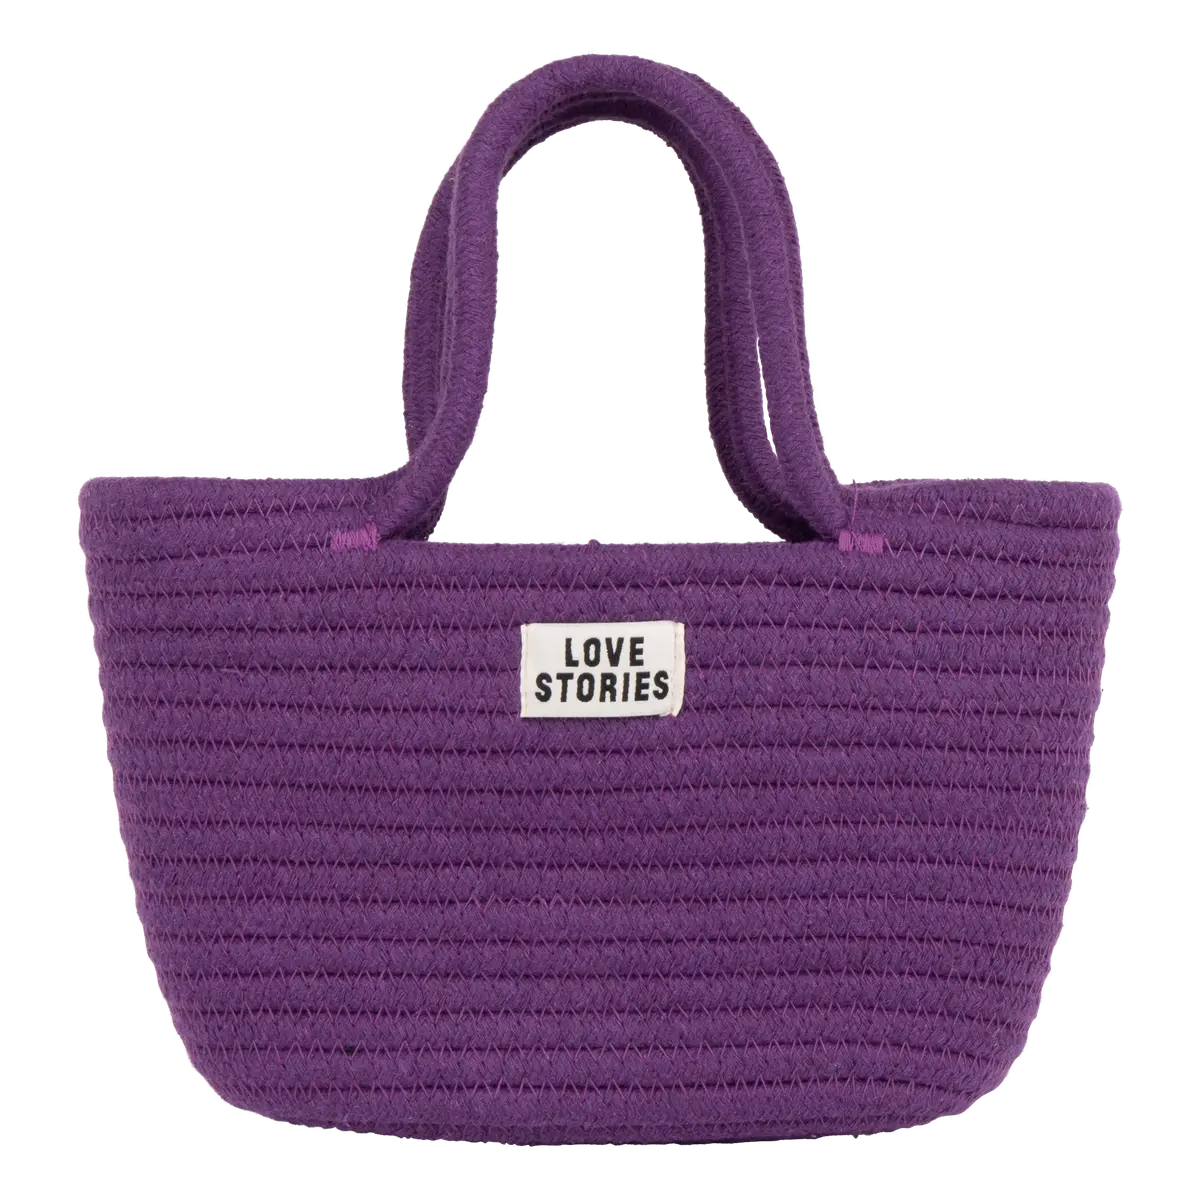 Basket purple